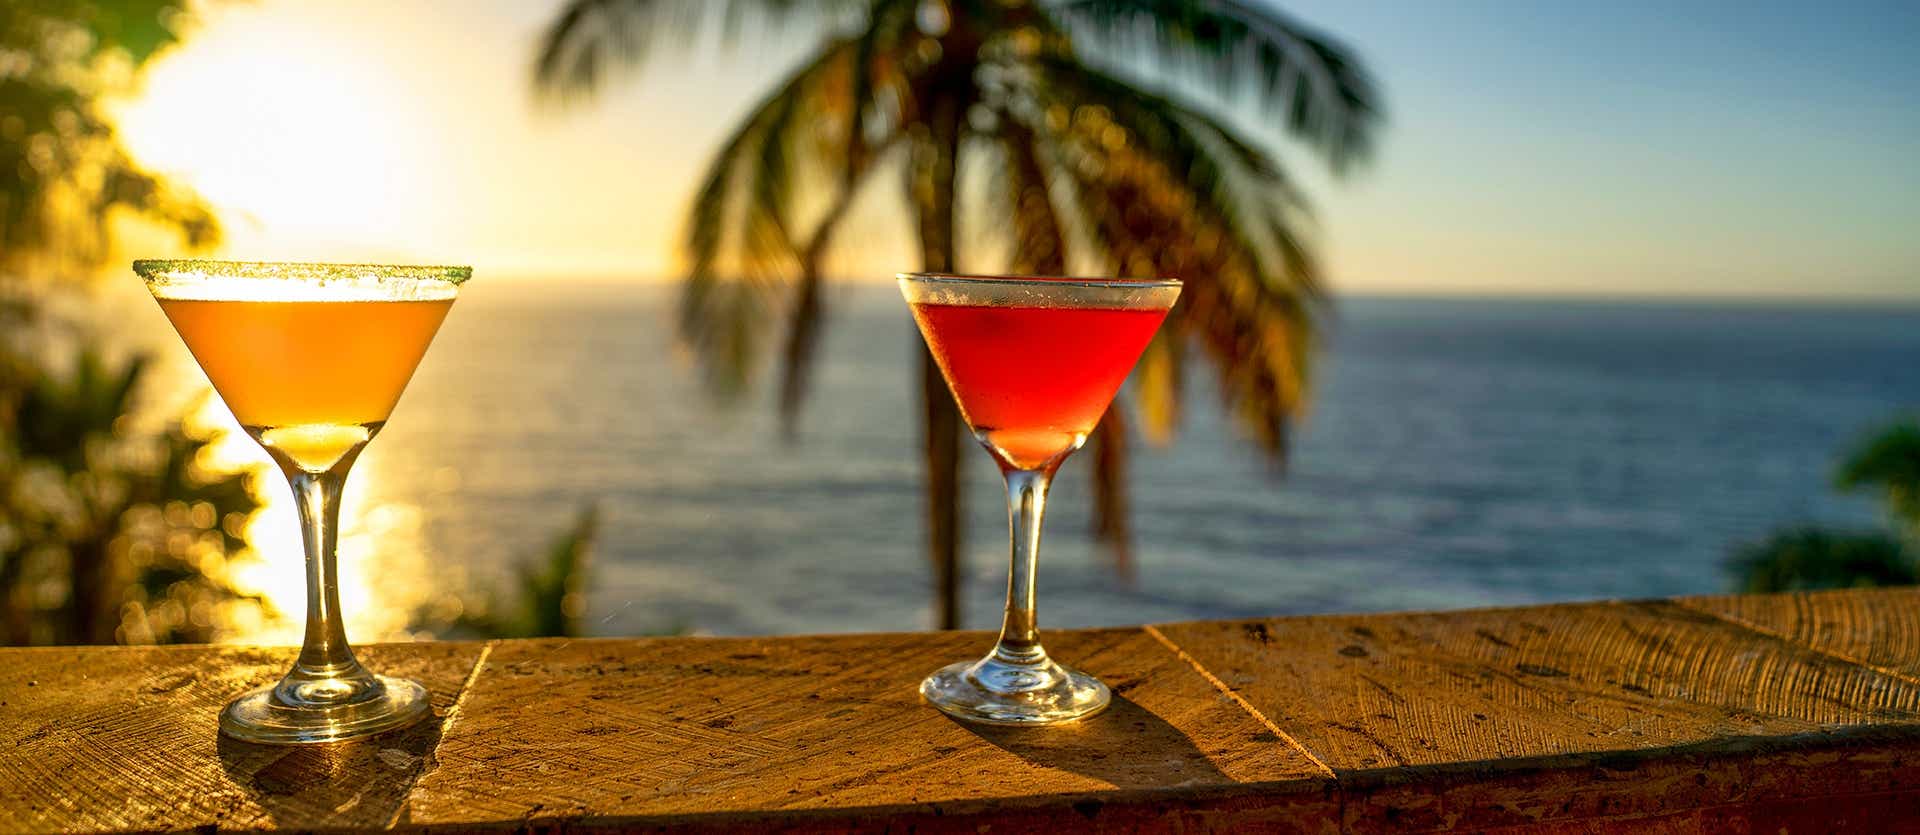 Cocktail Hour <span class="iconos separador"></span> Puerto Vallarta